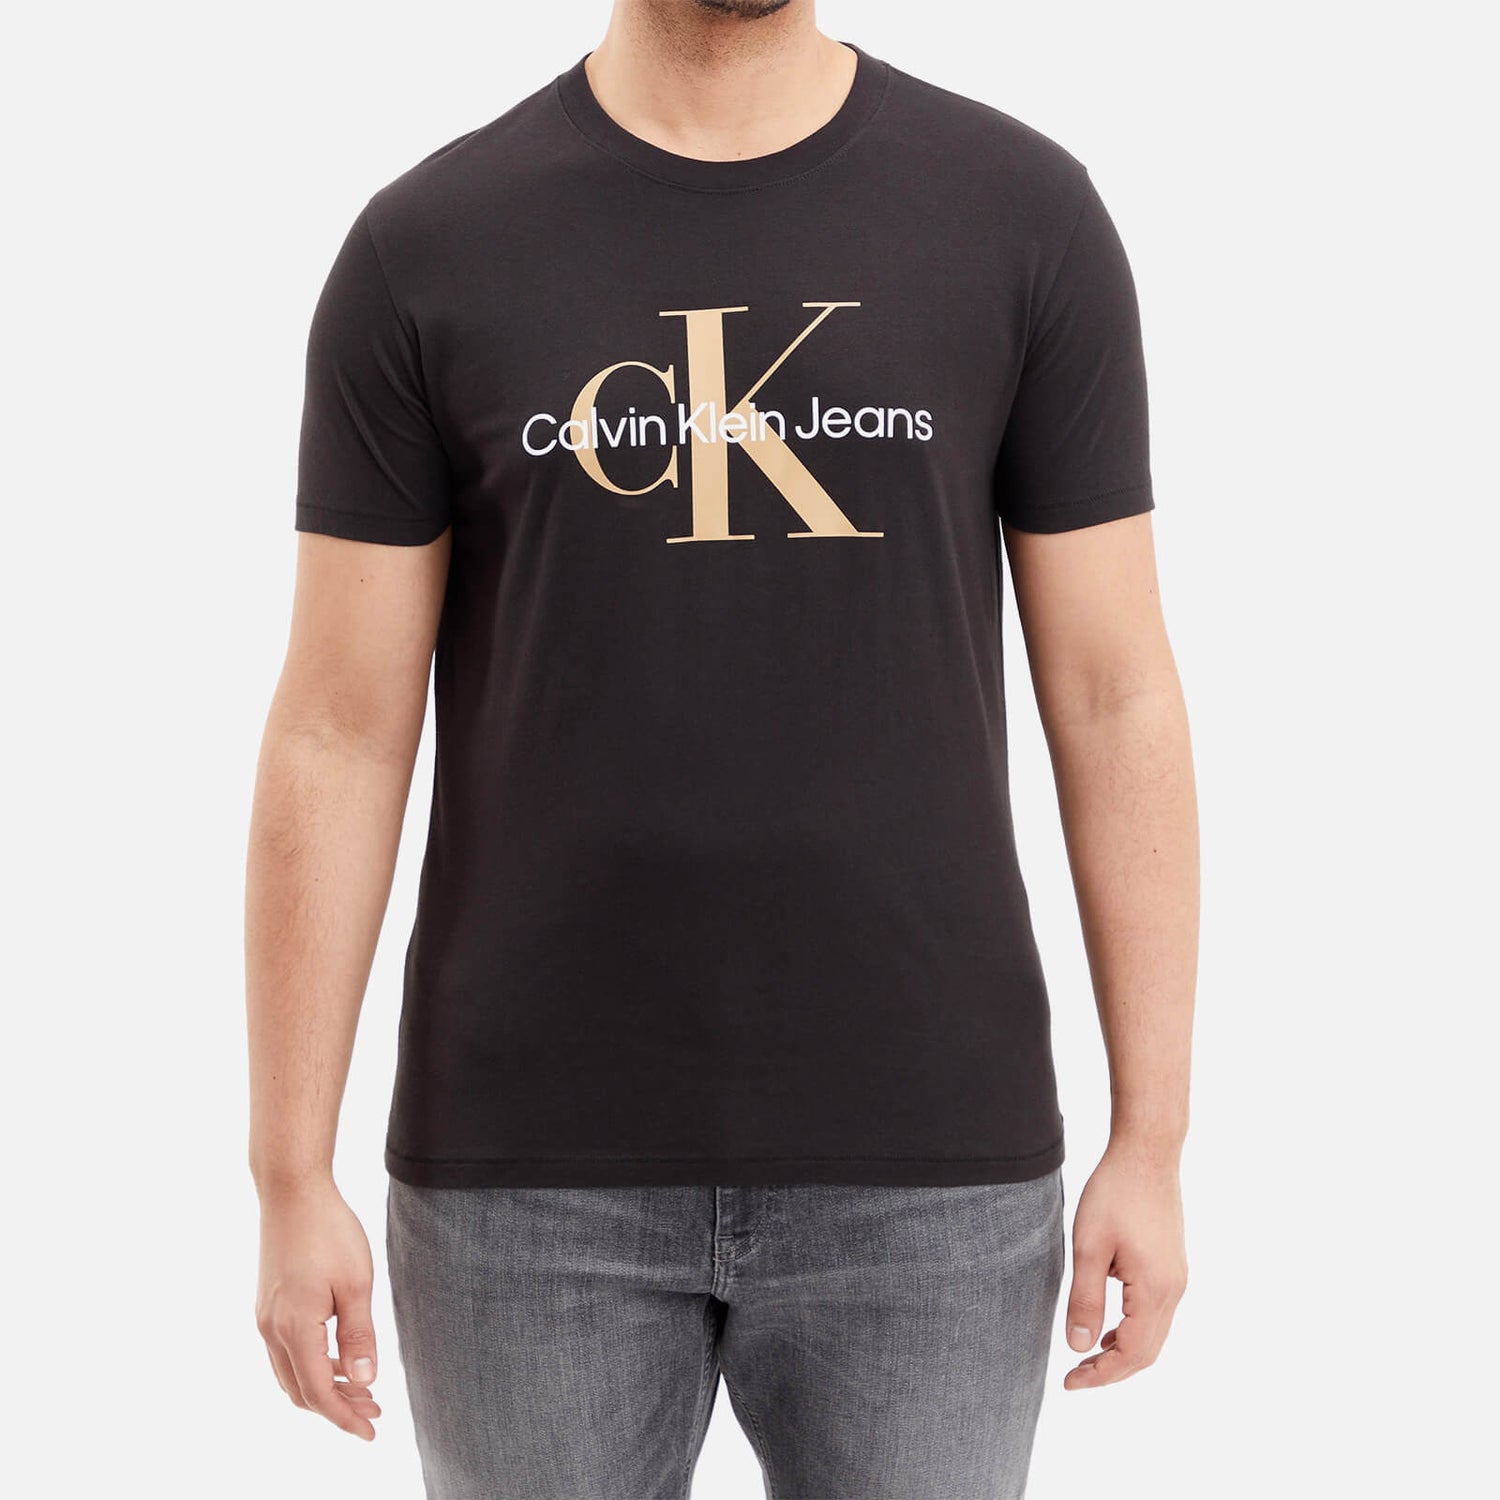 Calvin Klein Jeans Organic Cotton-Blend T-Shirt